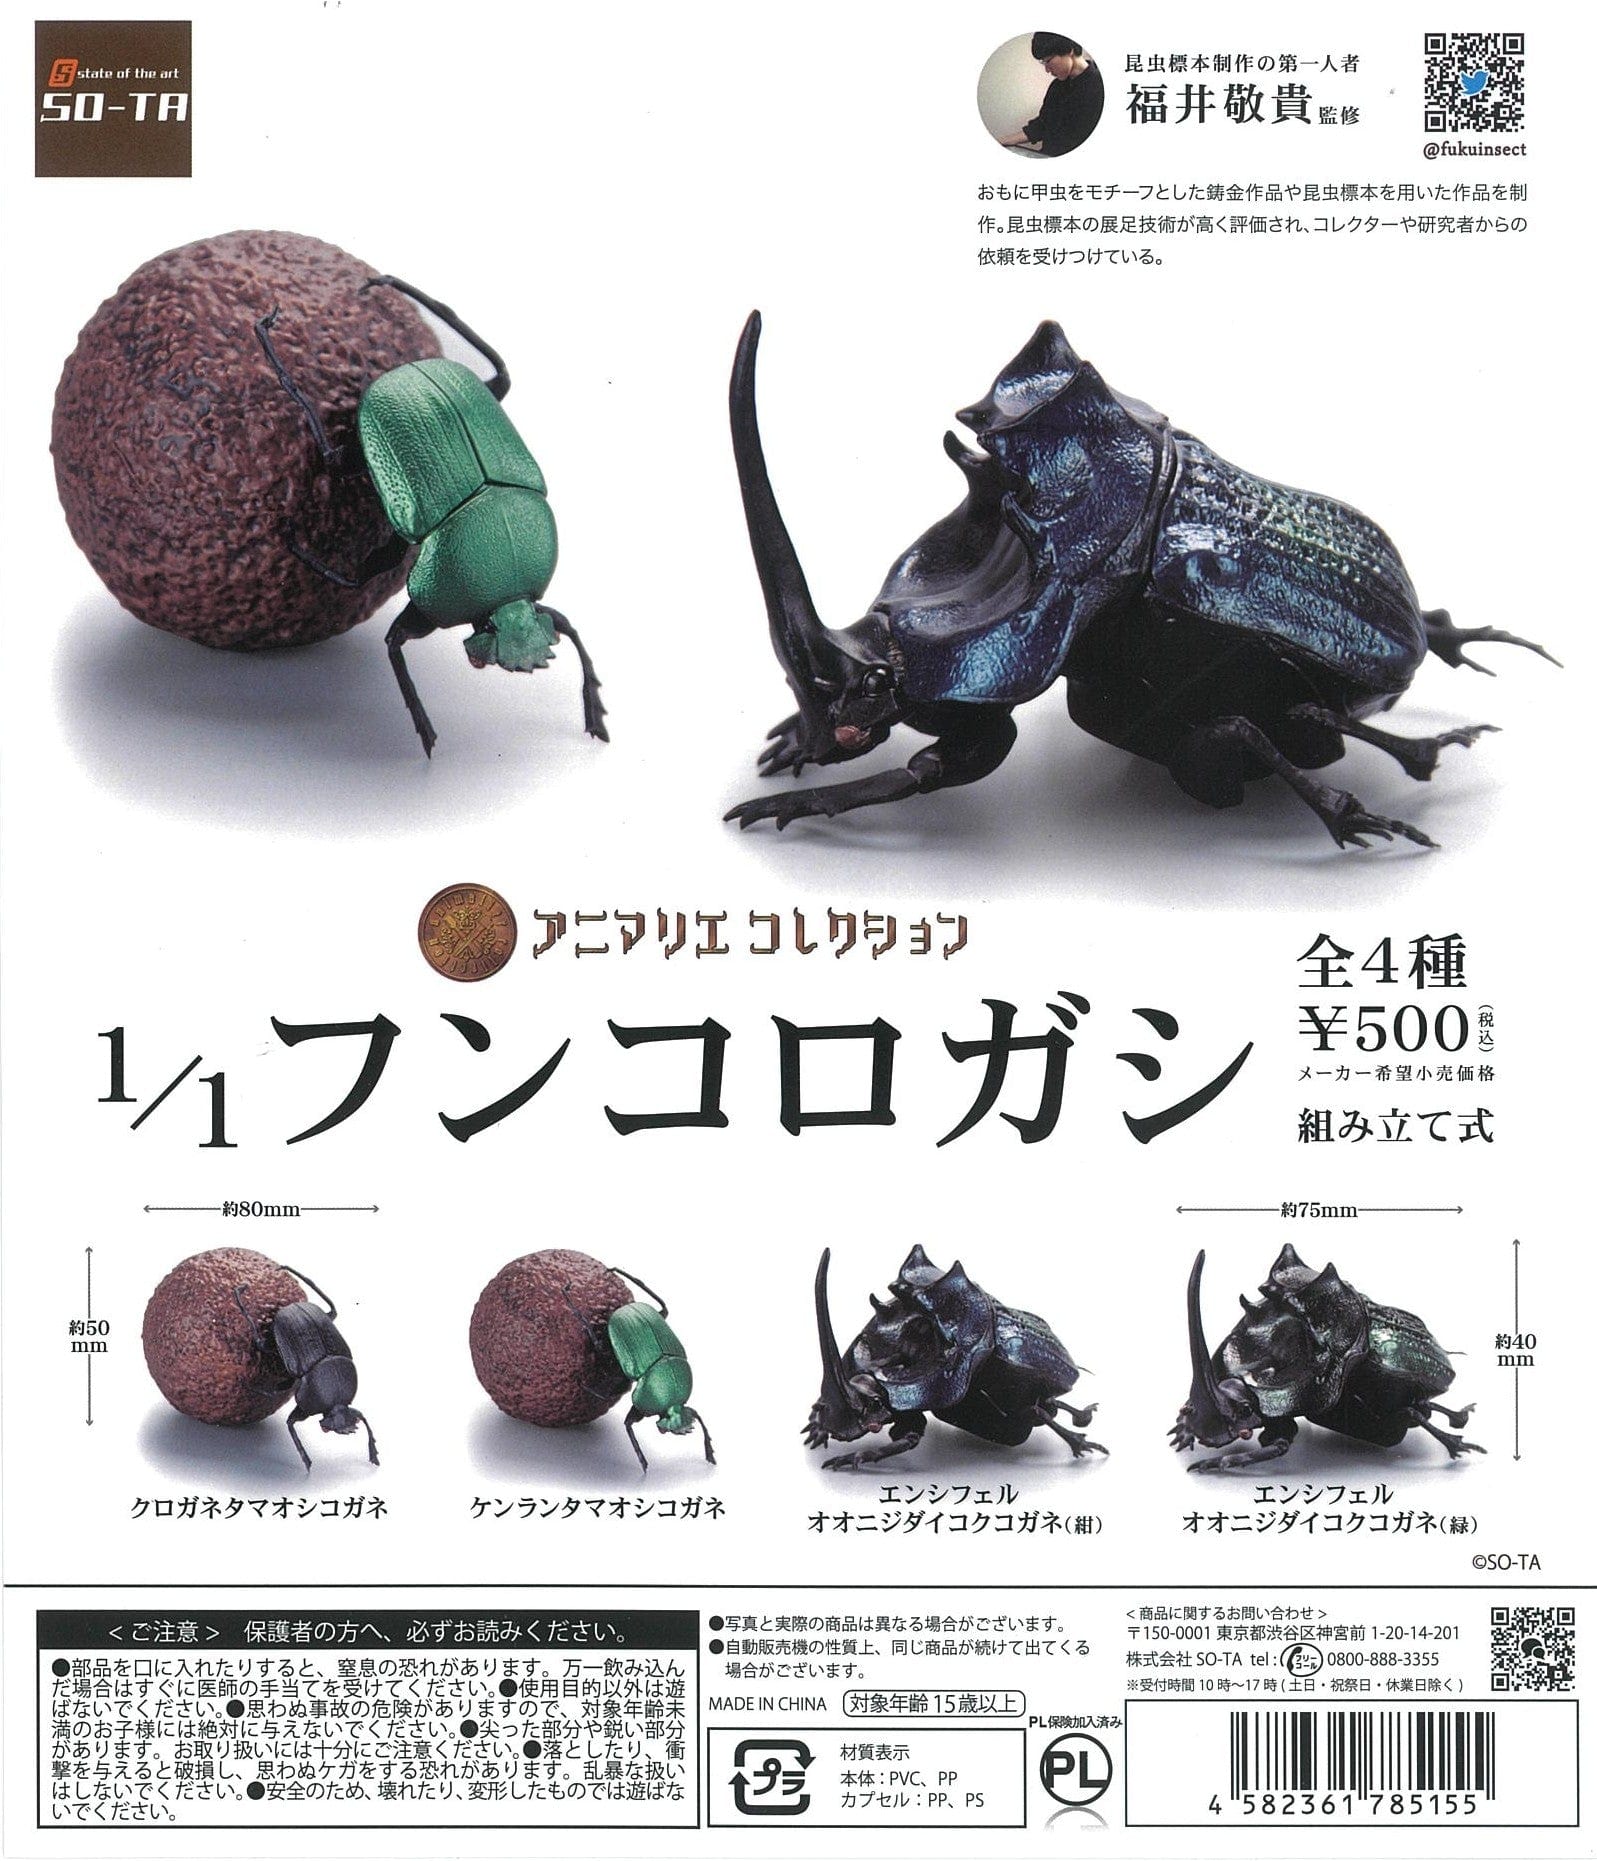 SO-TA CP1738 1/1 Dung Beetle